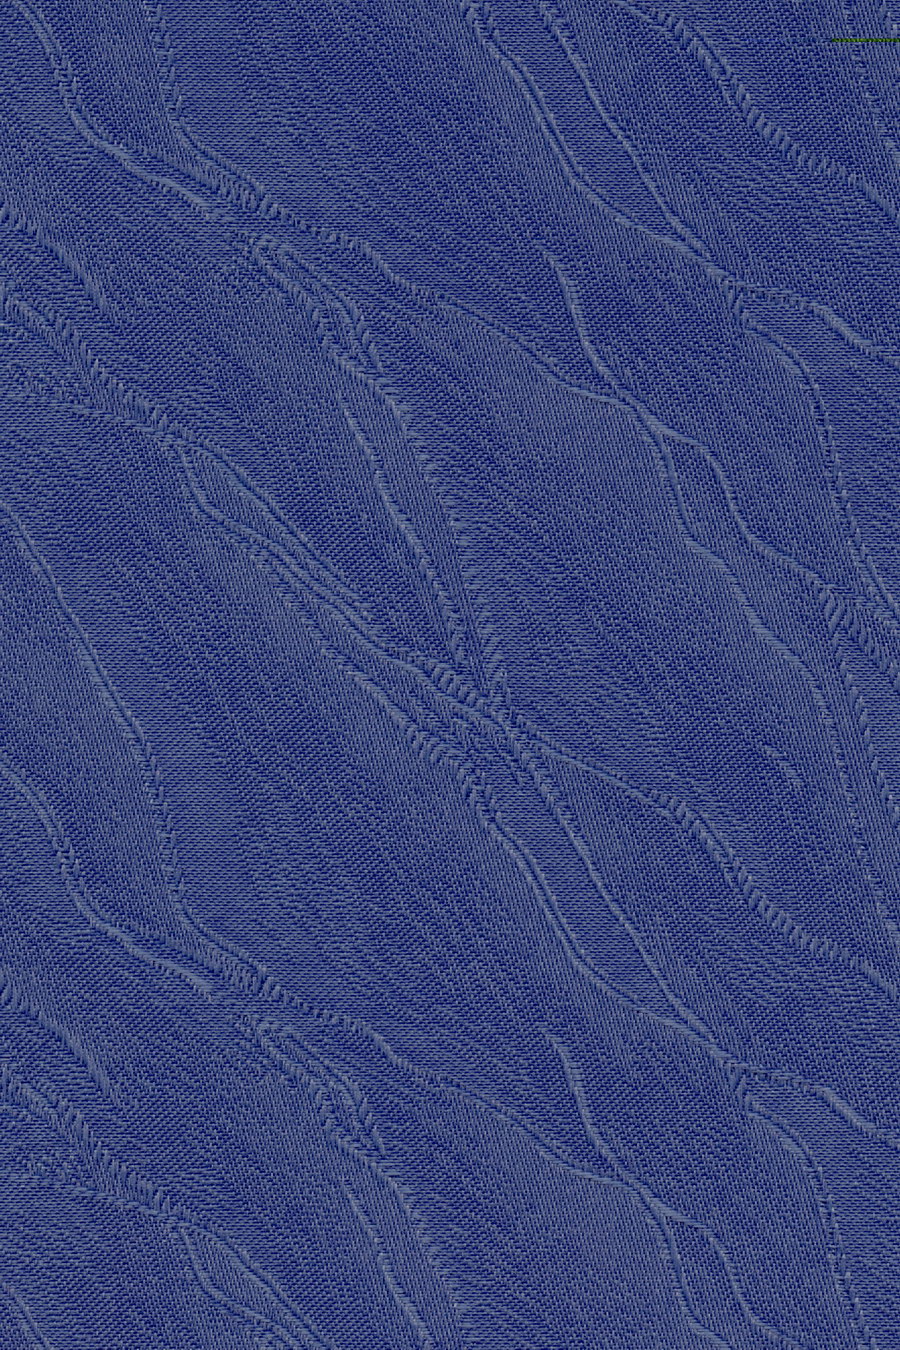 Ткань SUNTIME JAQUARD синий 89000 для рольштор